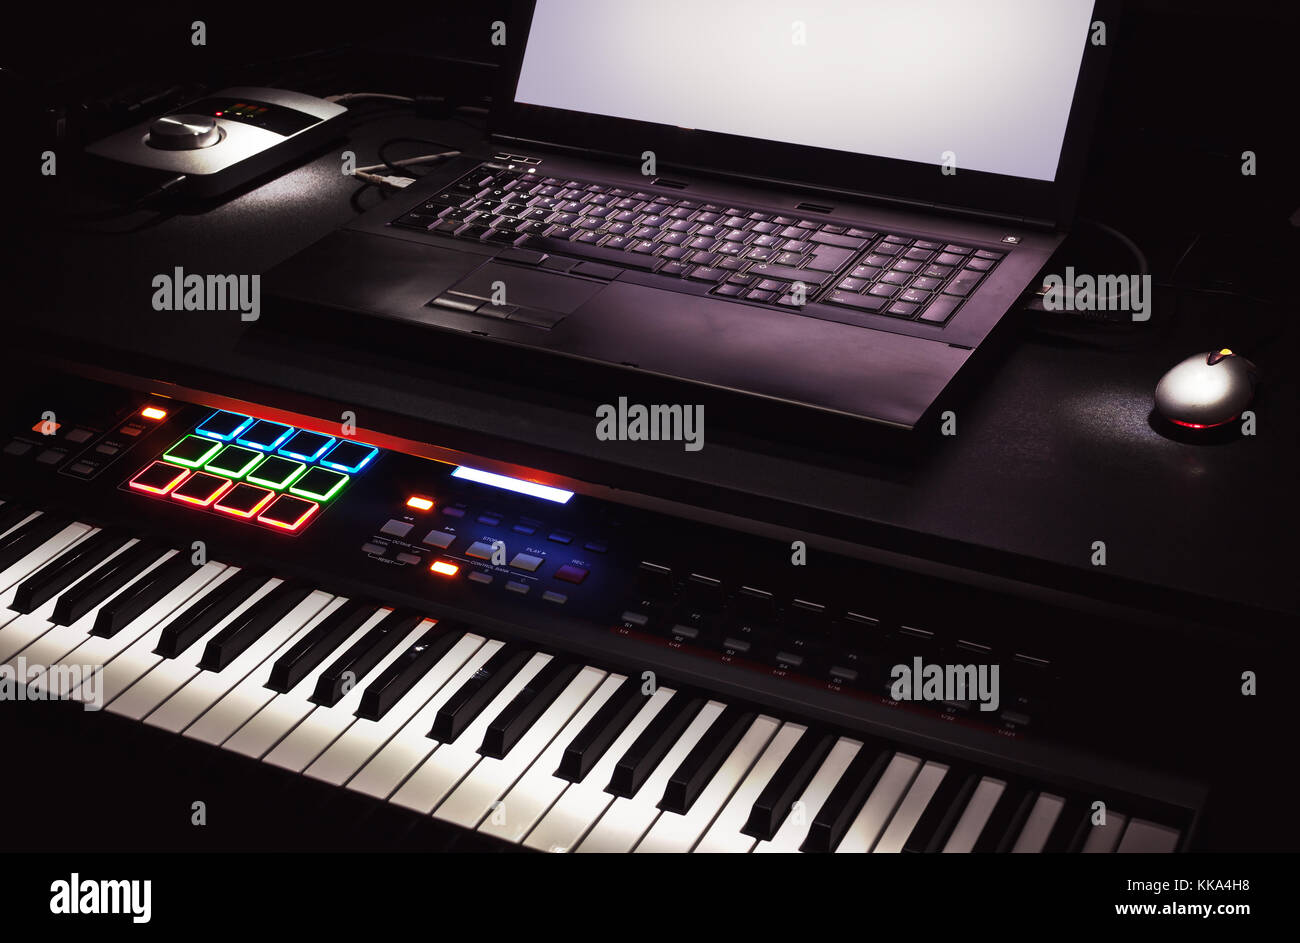 Mini Home Studio, MIDI-Controller und Laptop auf dem Tisch Stockfotografie  - Alamy